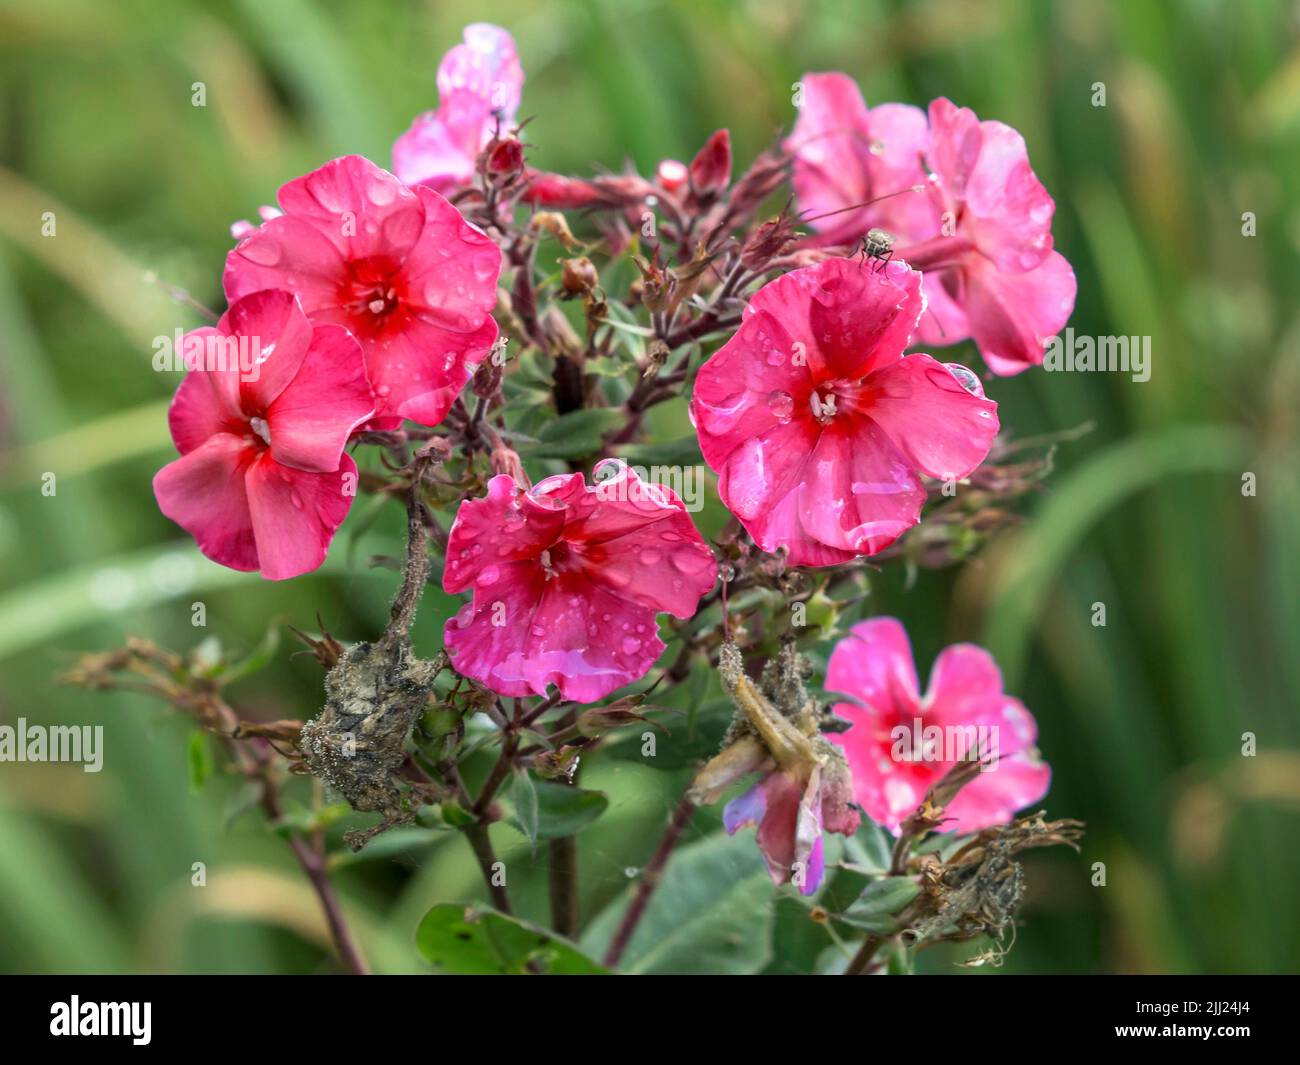 Pink Phlox flowers after a rain shower Stock Photo